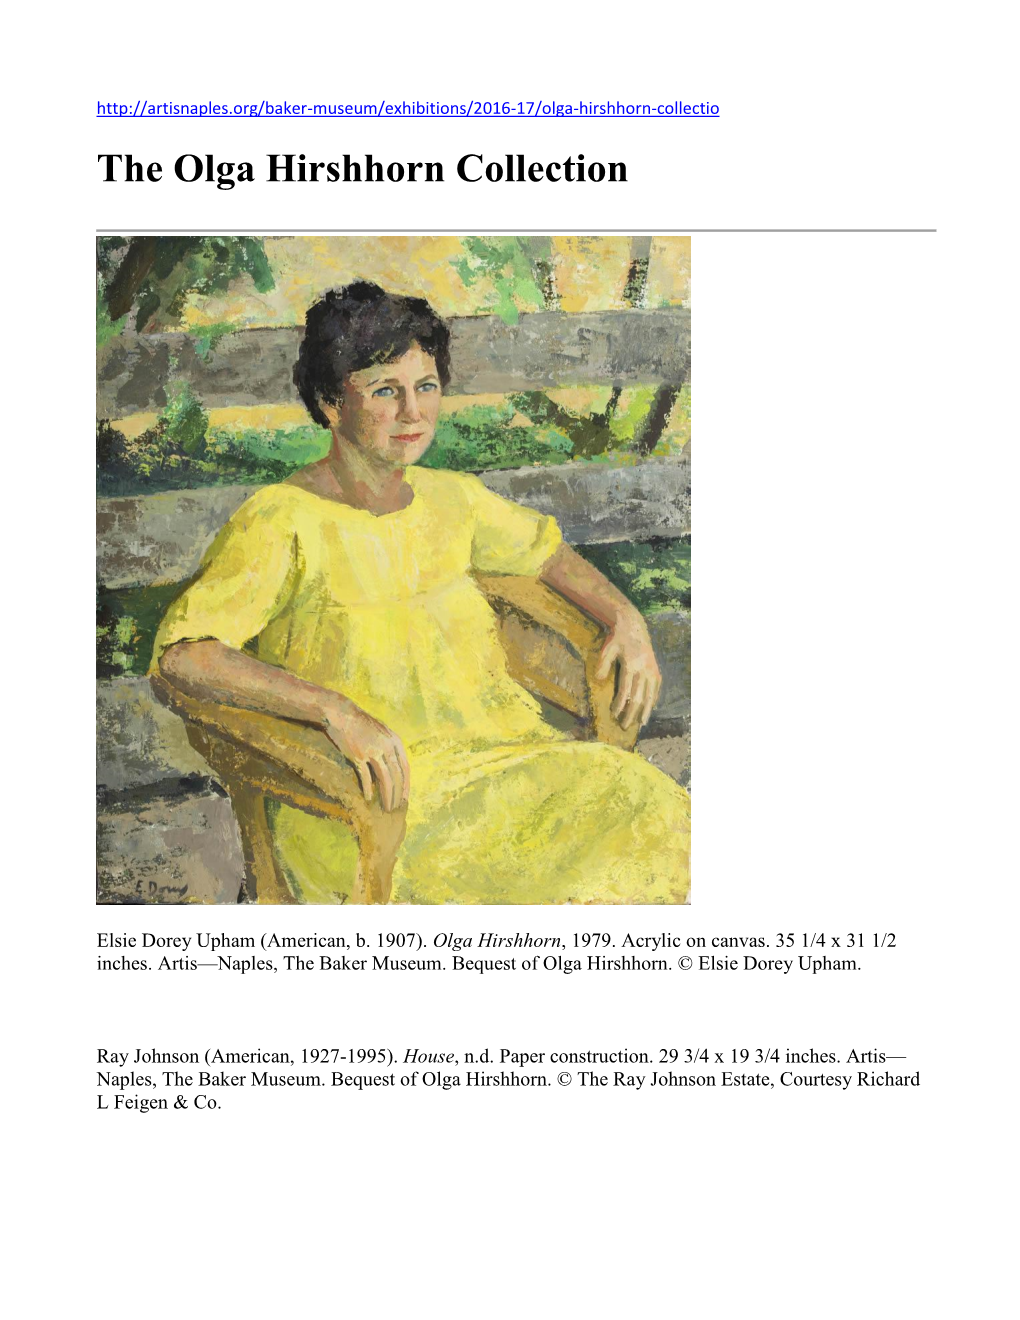 The Olga Hirshhorn Collection